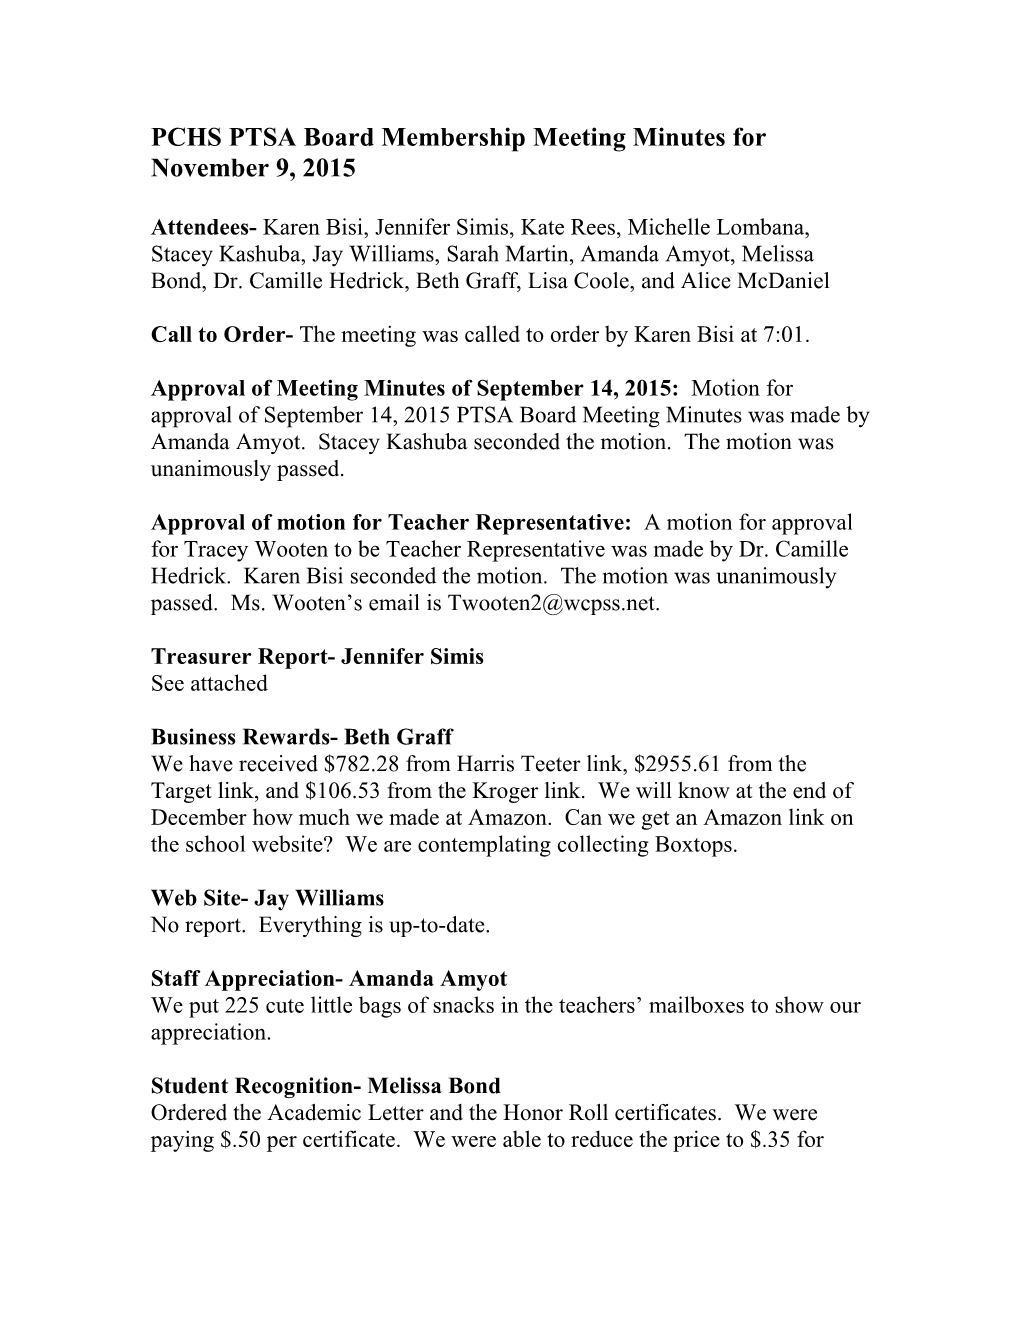 PCHS PTSA Board Membership Meeting Minutes for November 9, 2015